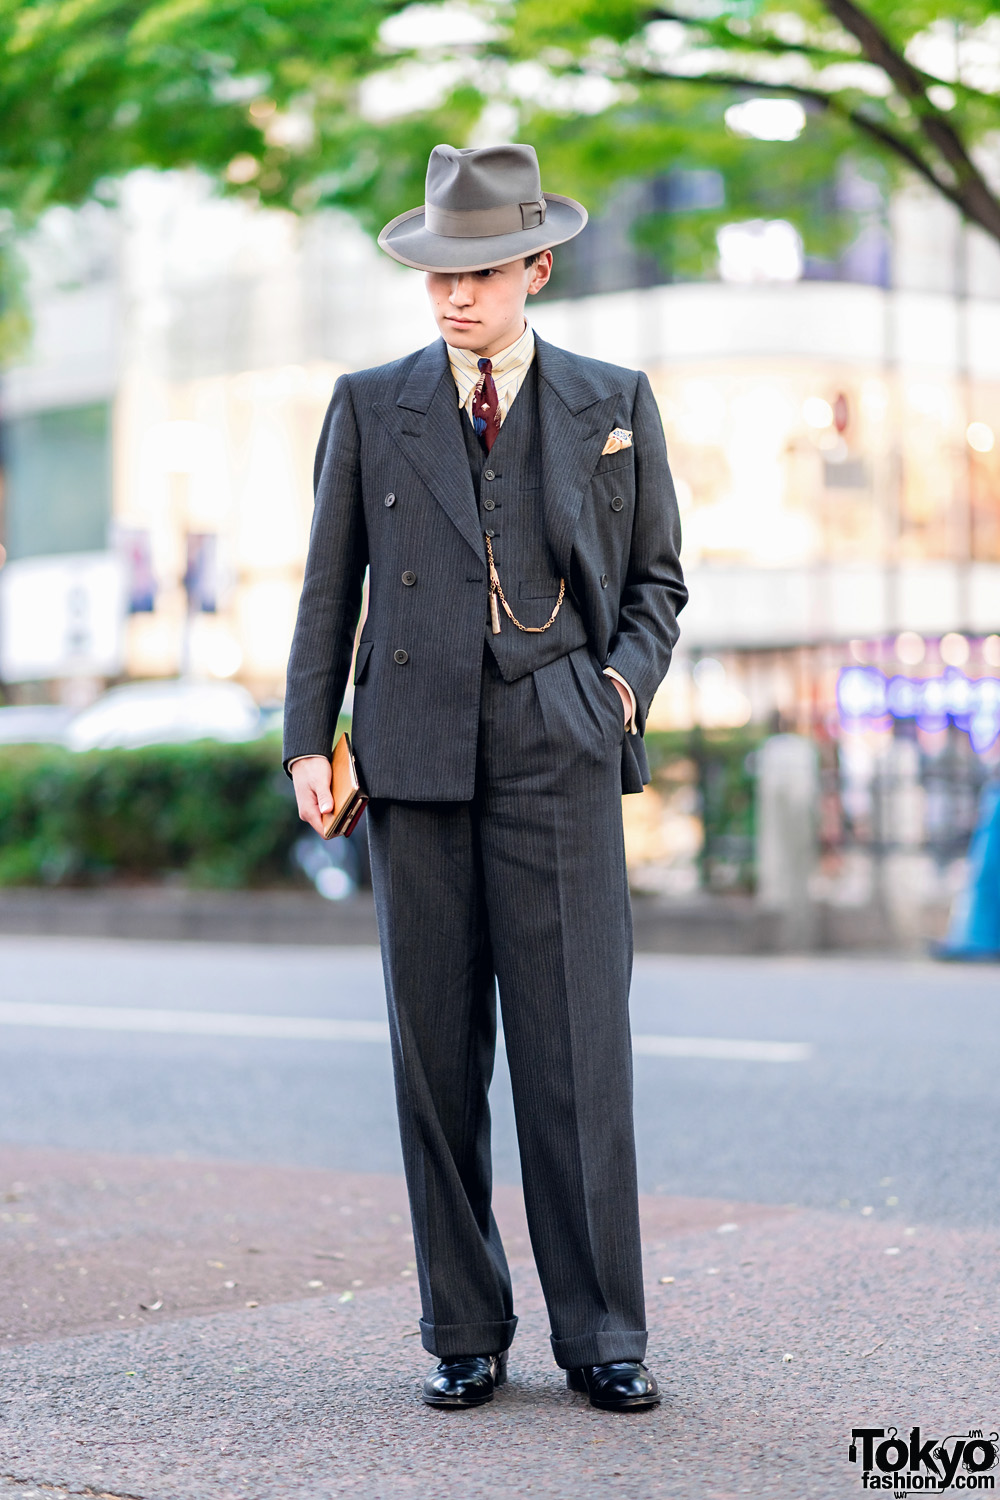 Dapper Tokyo Street Fashion w/ Vintage 1940's Stetson Hat, Pocket Square, Bespoke Pinstripe Suit, Cuffed Pants & Lace-Up Dress Shoes